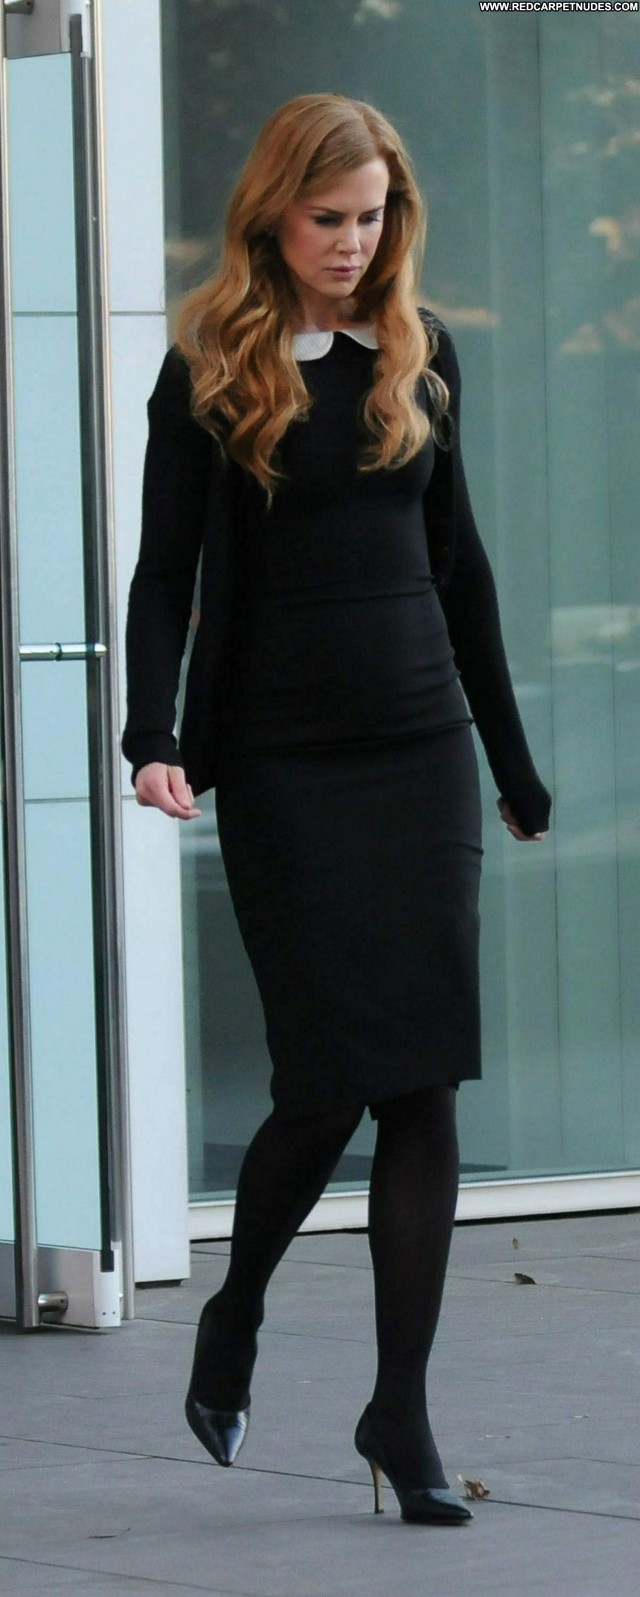 Nicole Kidman Good Morning America Shopping Celebrity Posing Hot Babe